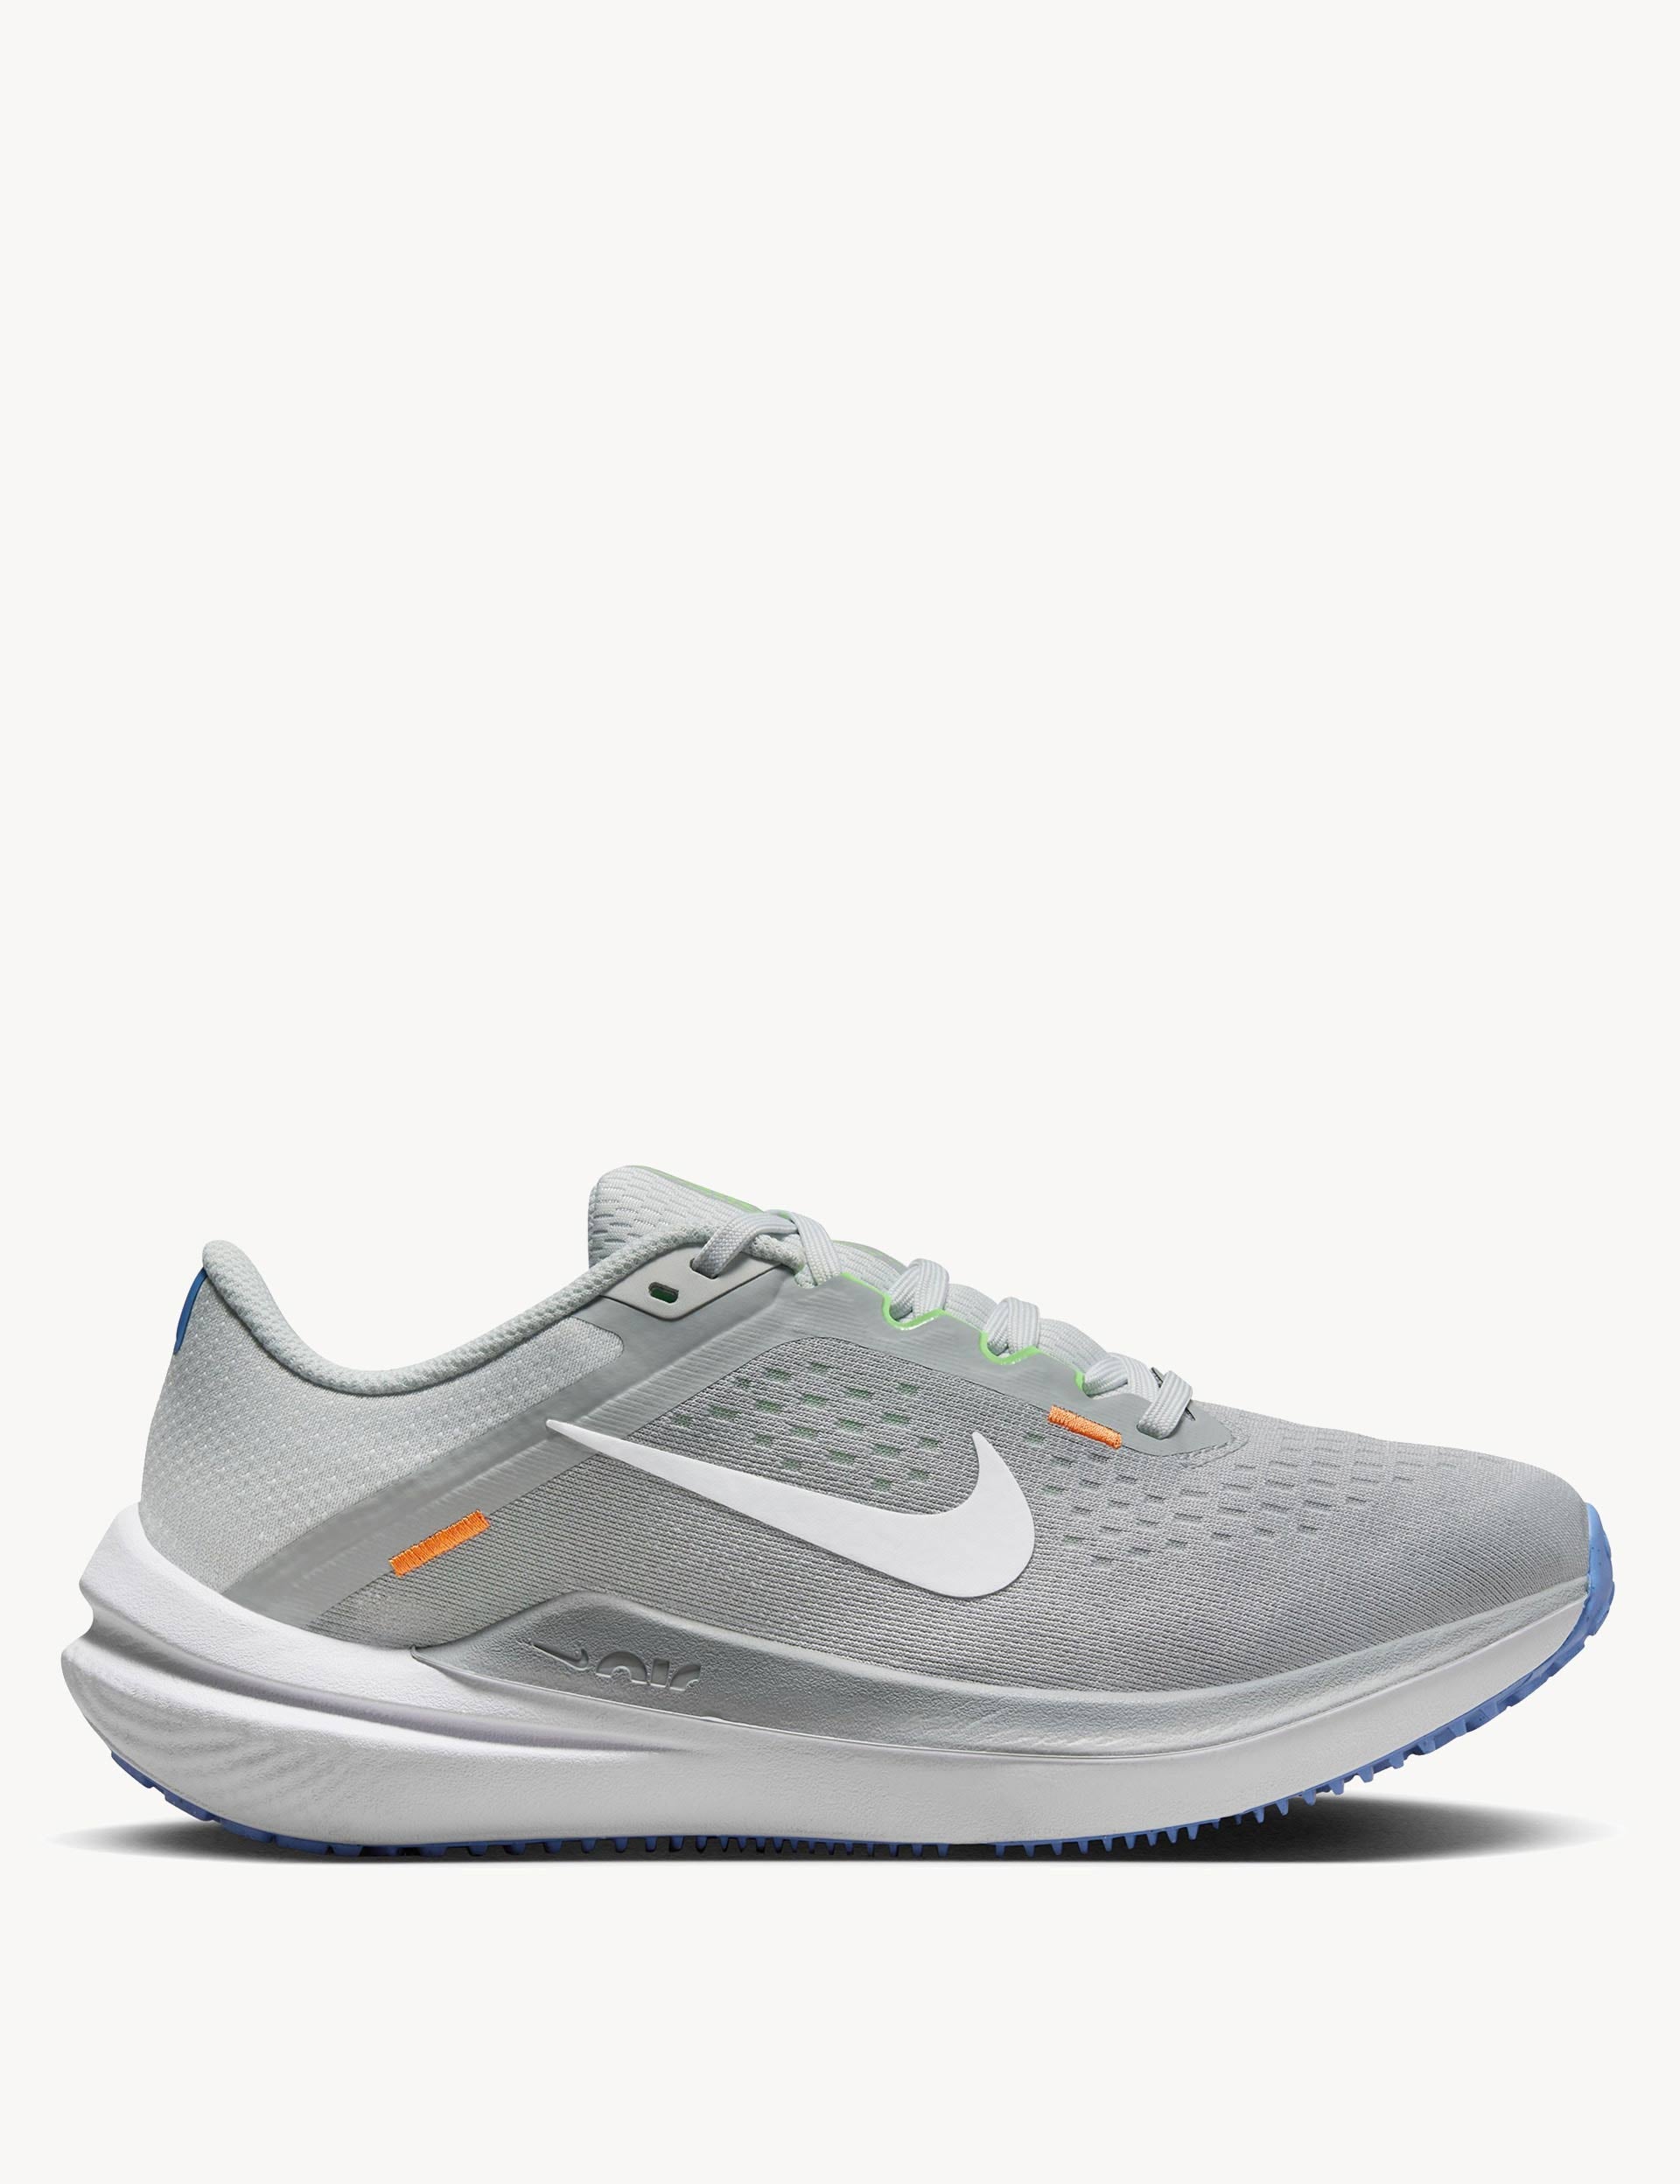 Nike | Winflo 10 Shoes - Grey/Polar/Photon Dust | The Sports Edit